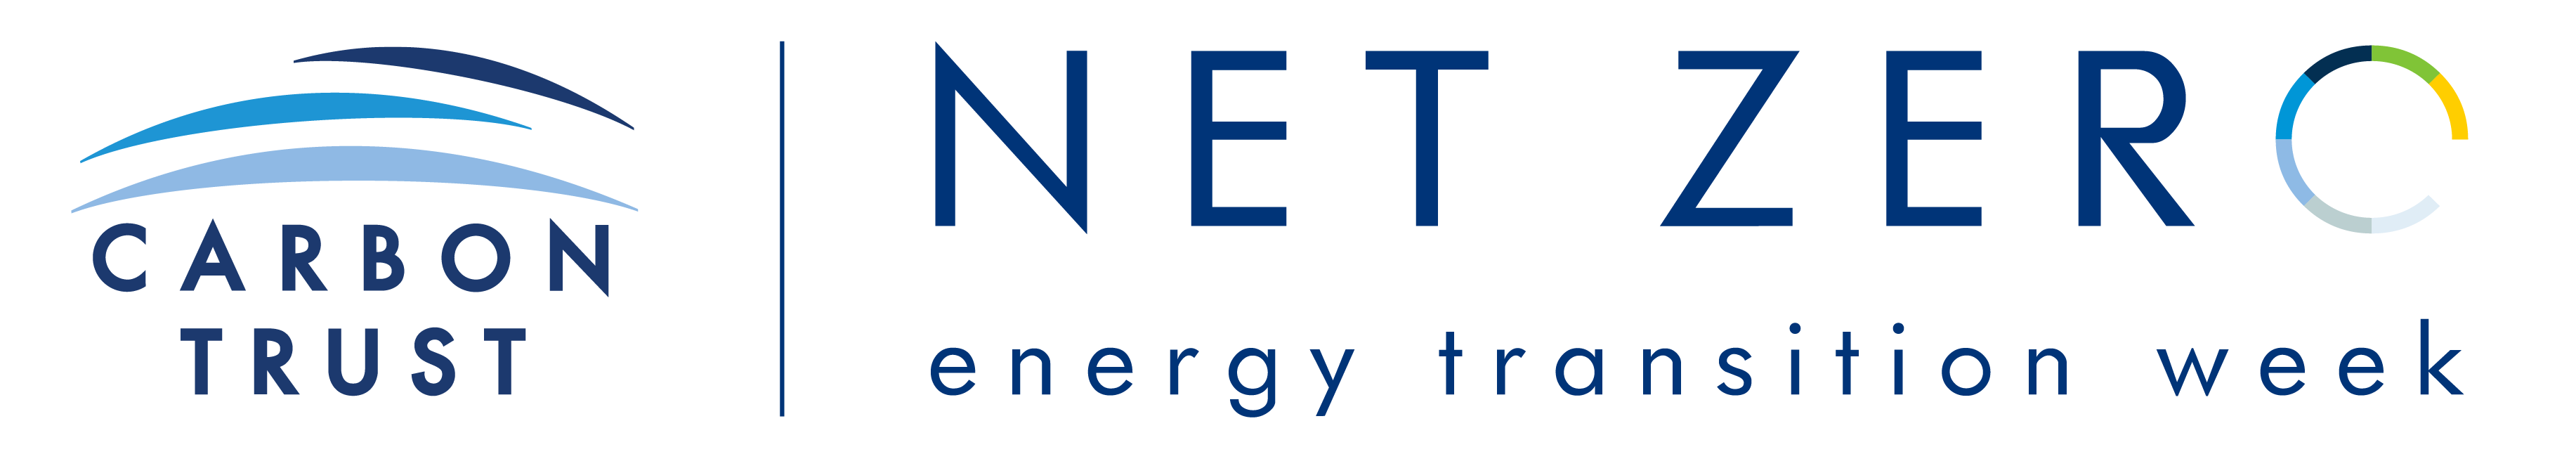 Net Zero Energy Transition